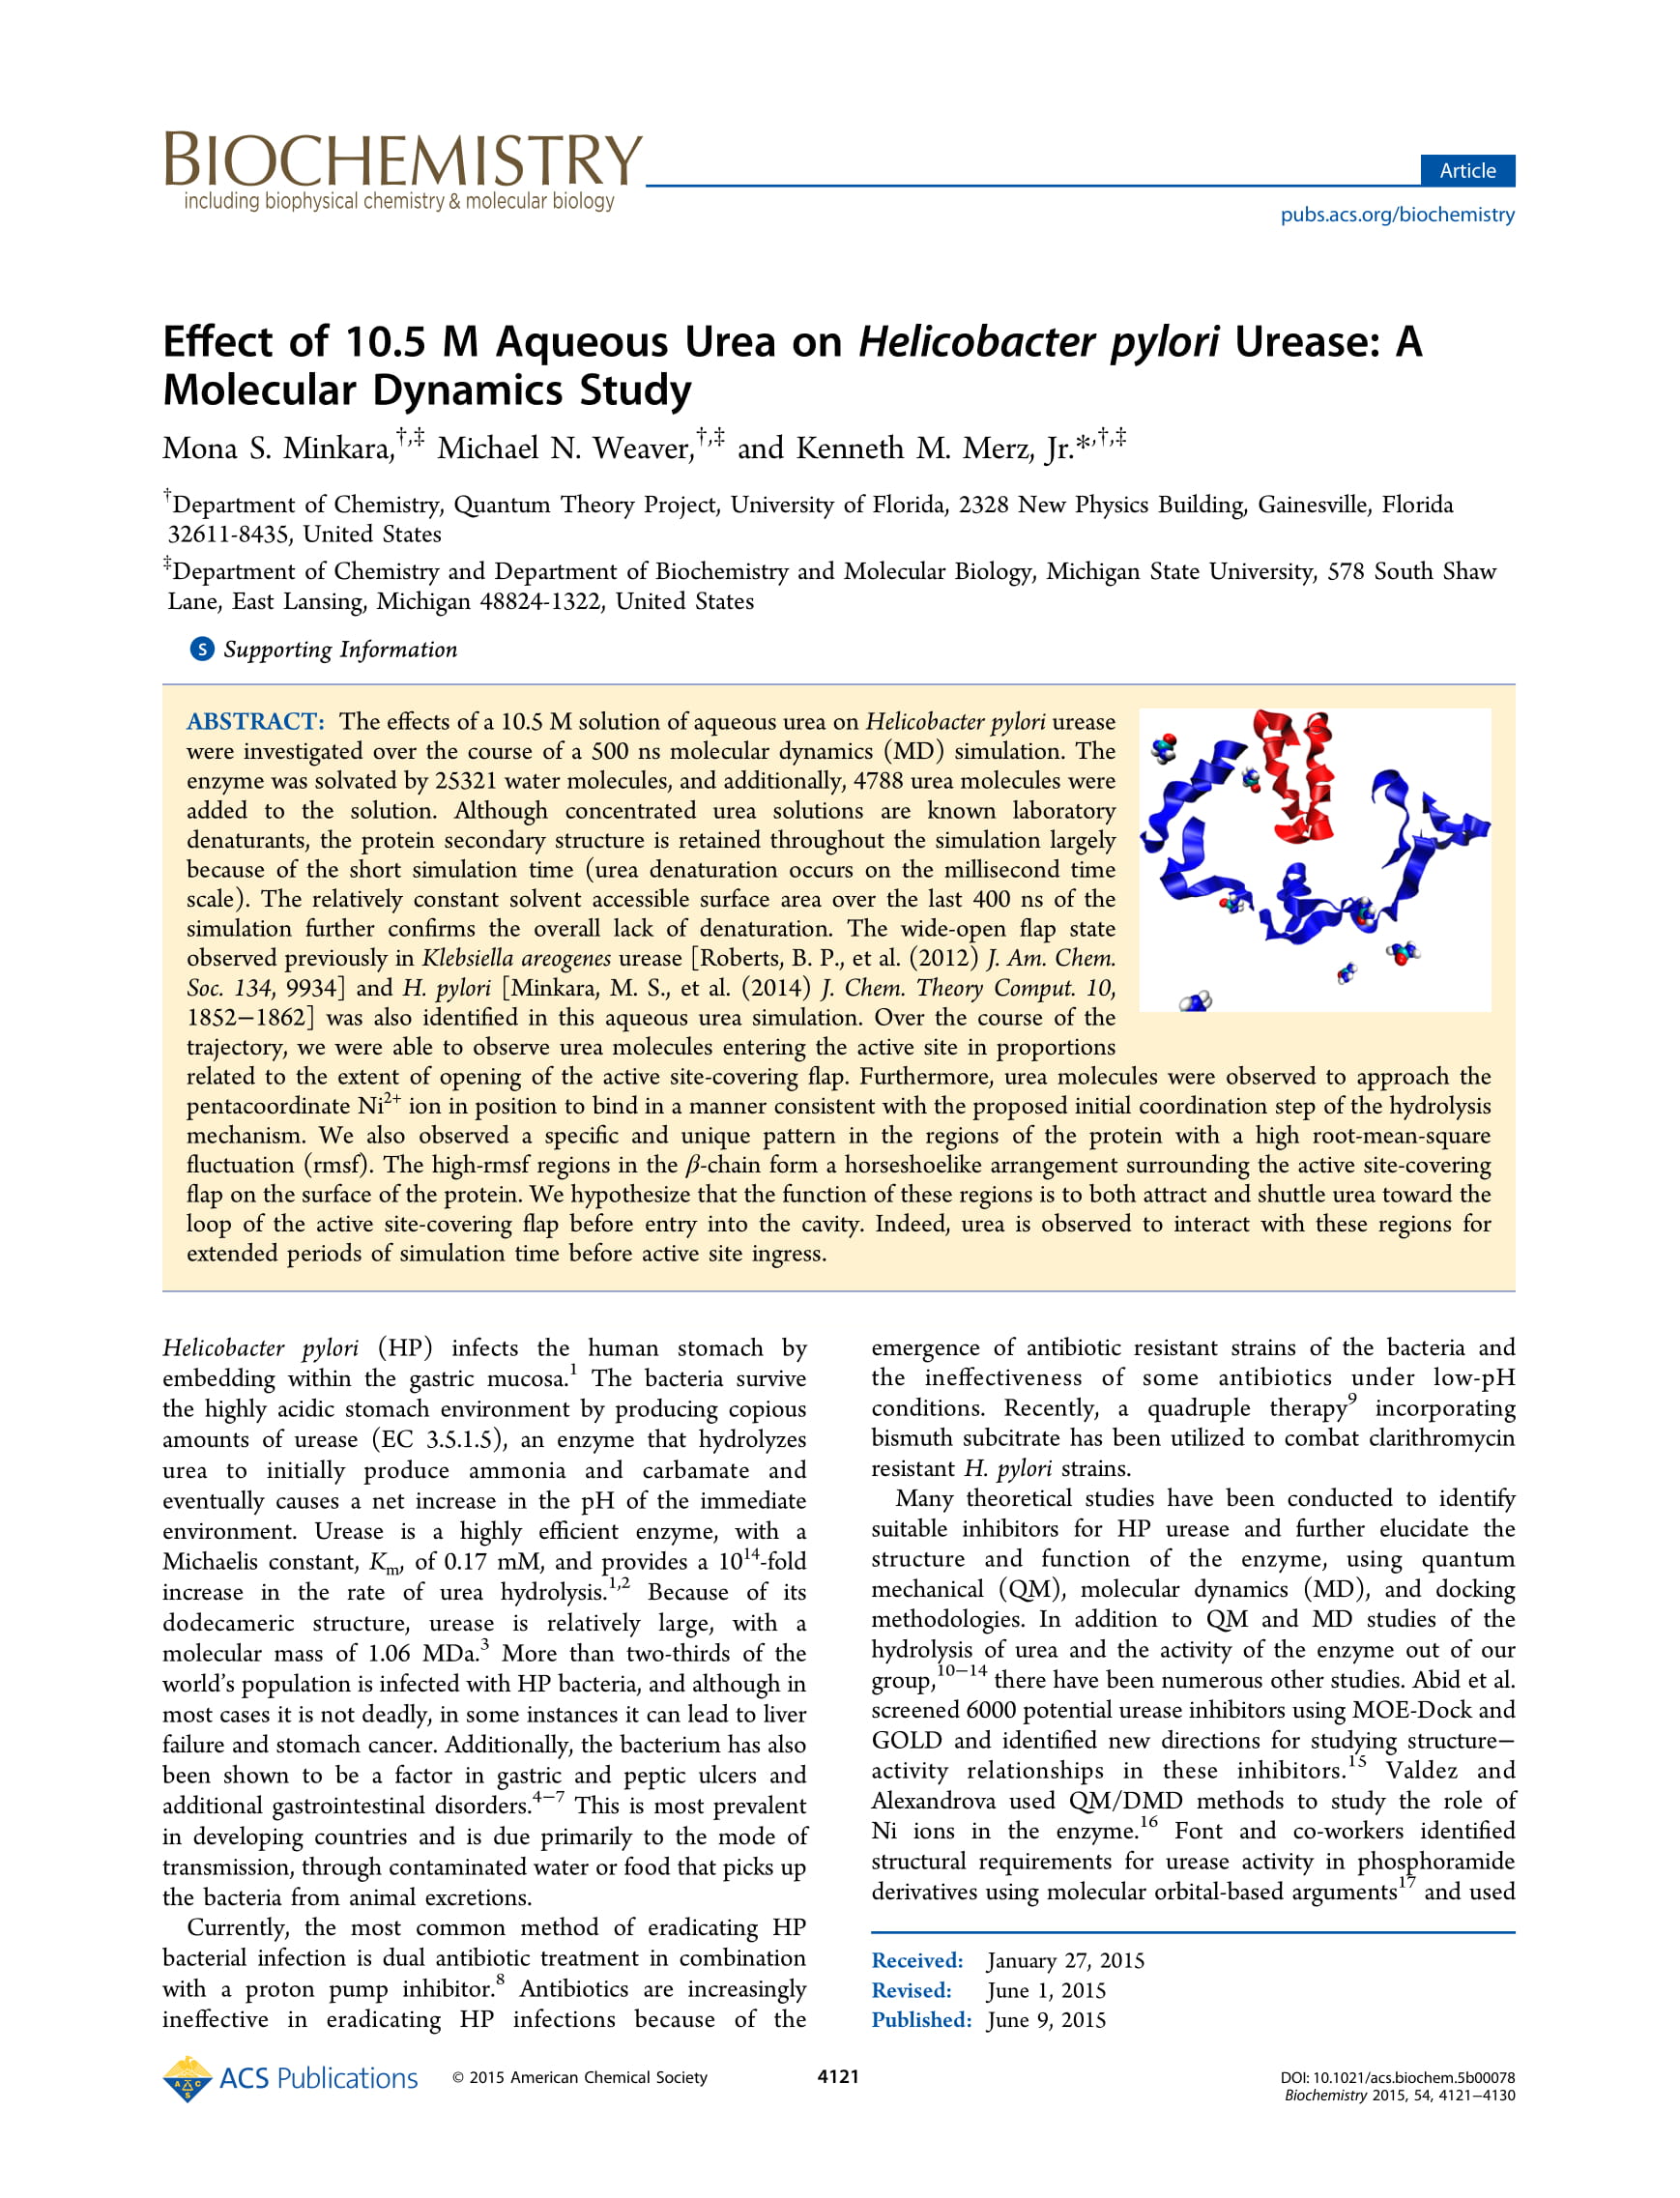 Effect of 10.5 M Aqueous Urea on Helicobacter Pylori Urease: A Molecular Dynamics Study